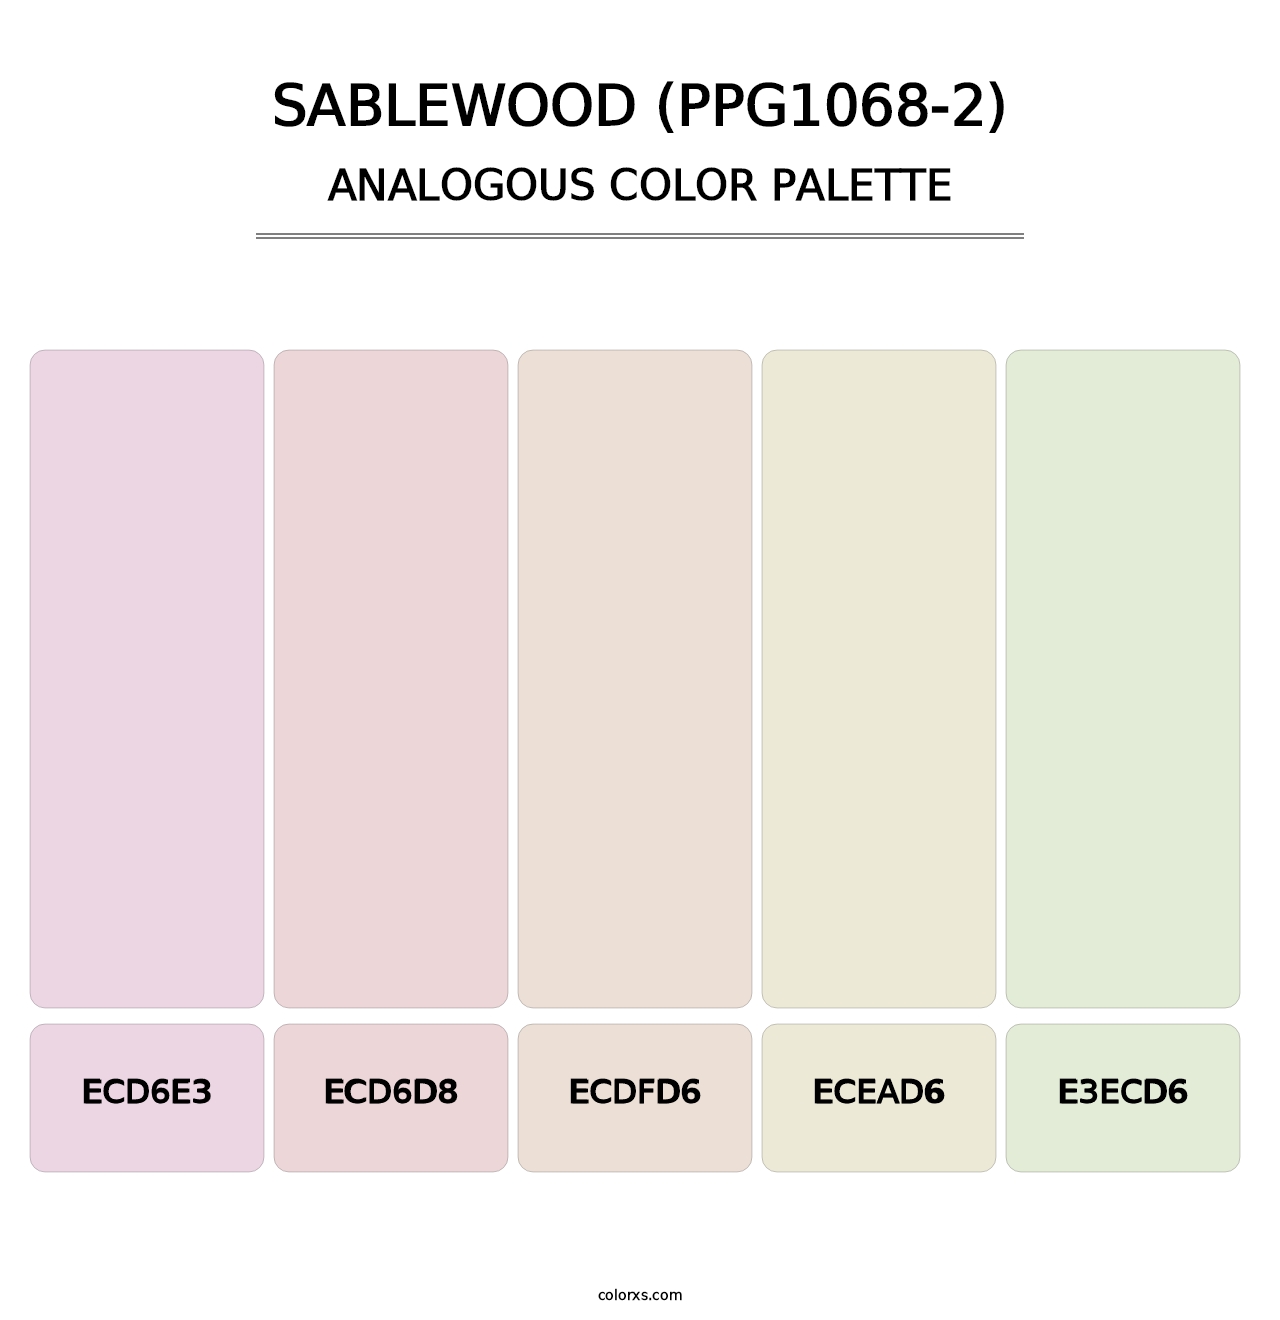 Sablewood (PPG1068-2) - Analogous Color Palette